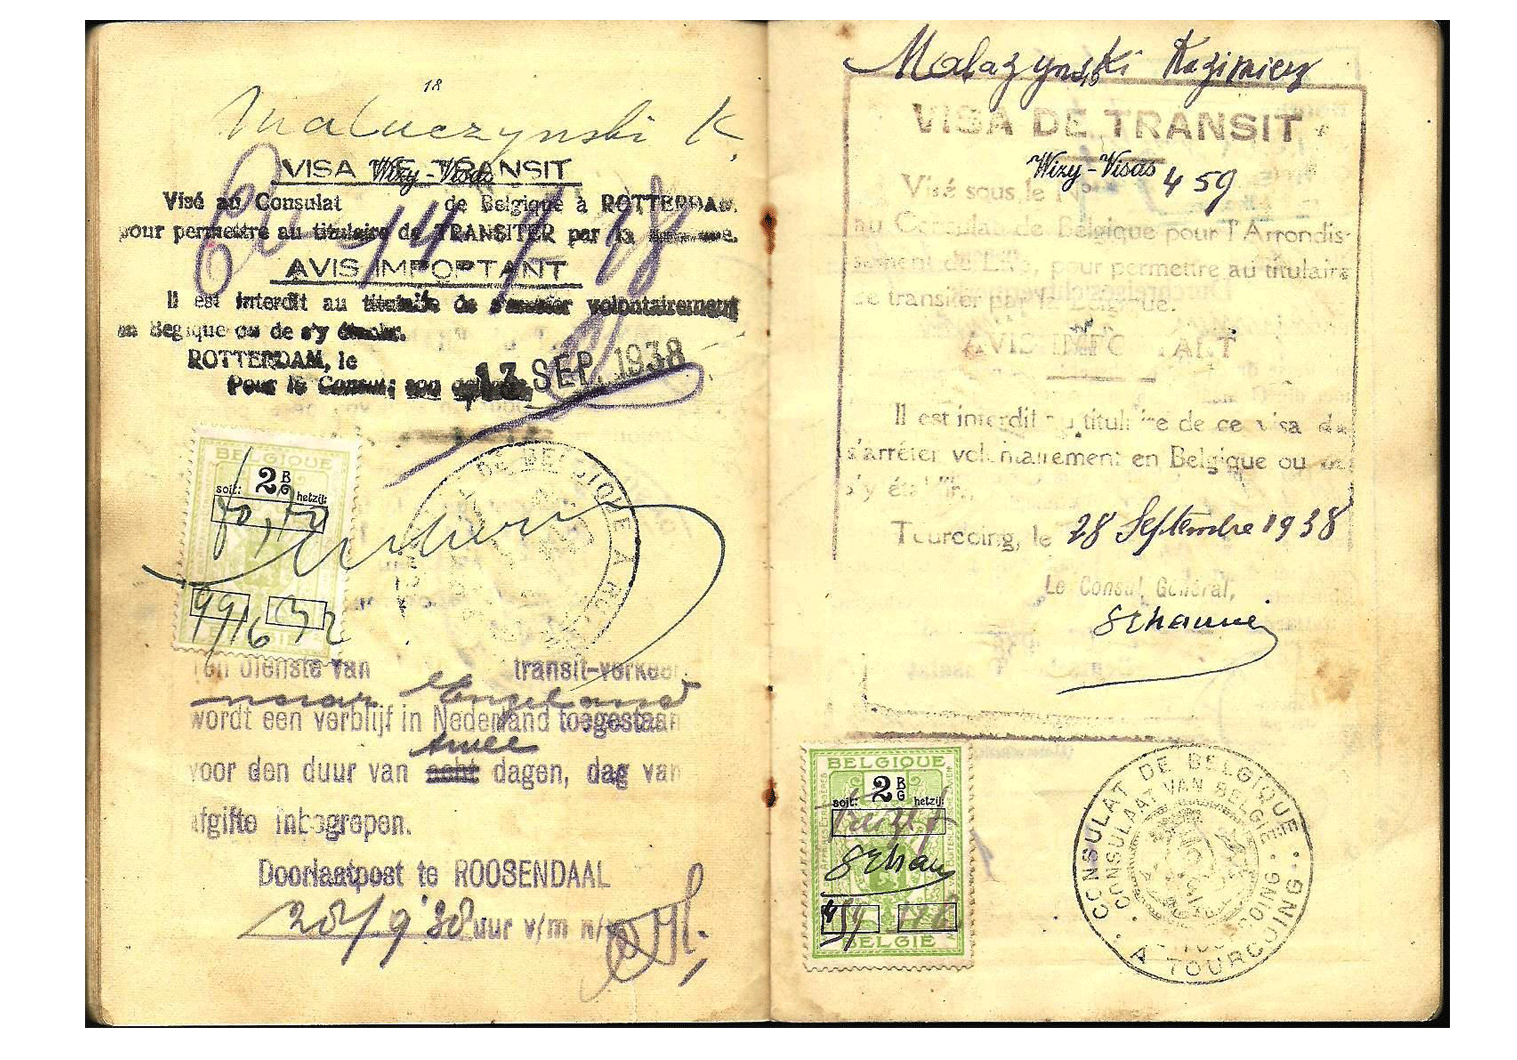 WW2 Belgium visa